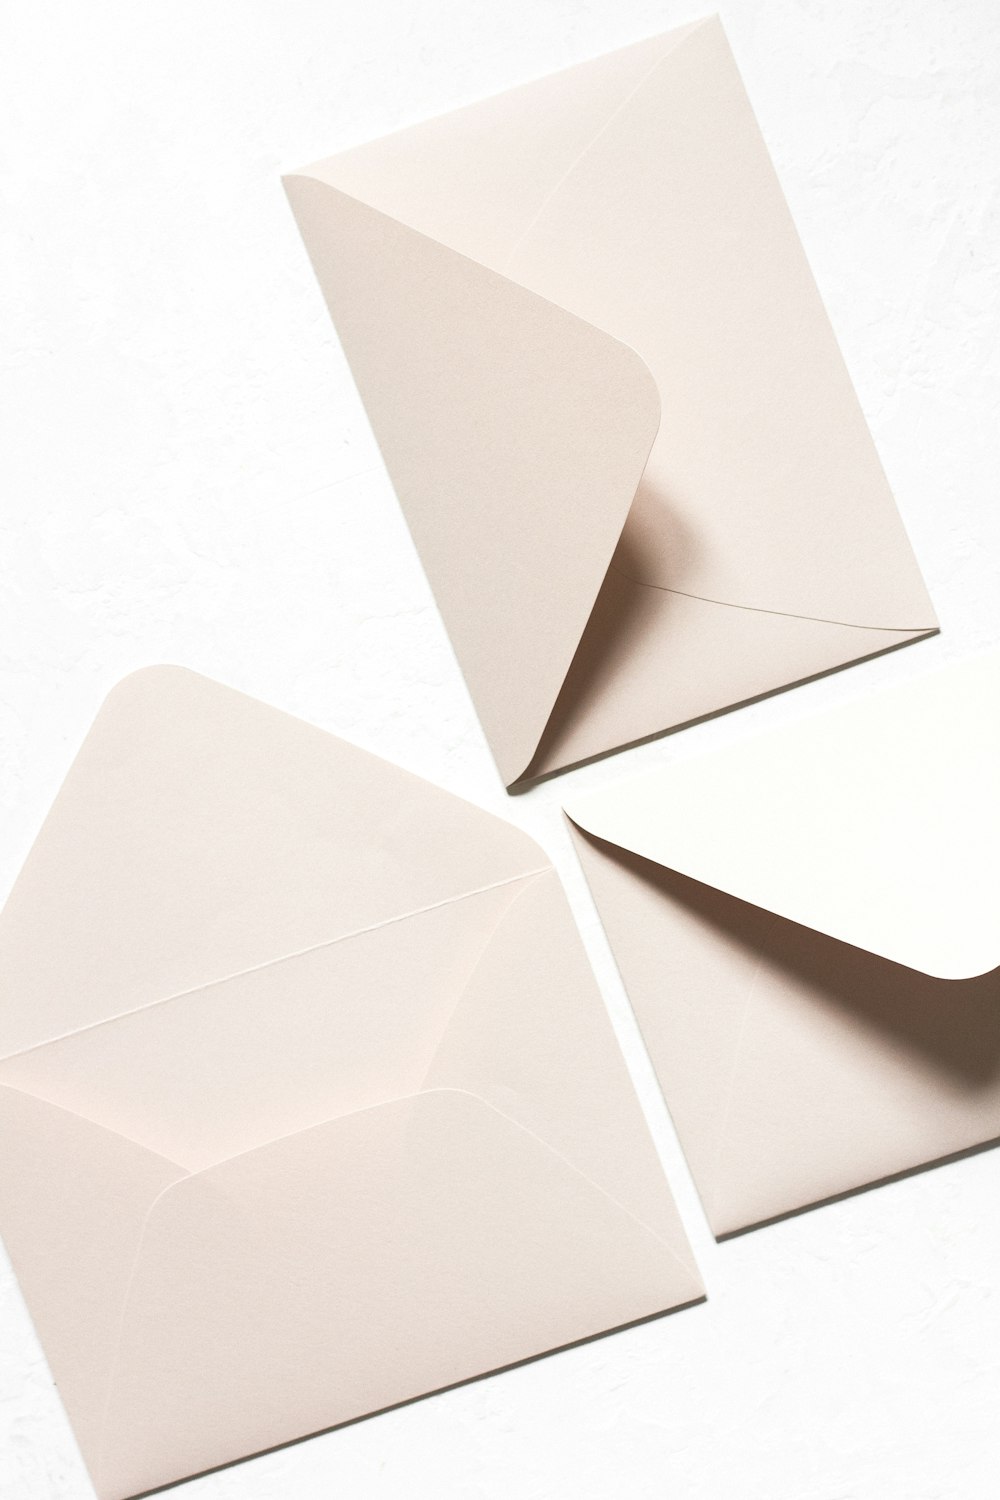 Três envelopes de correio branco